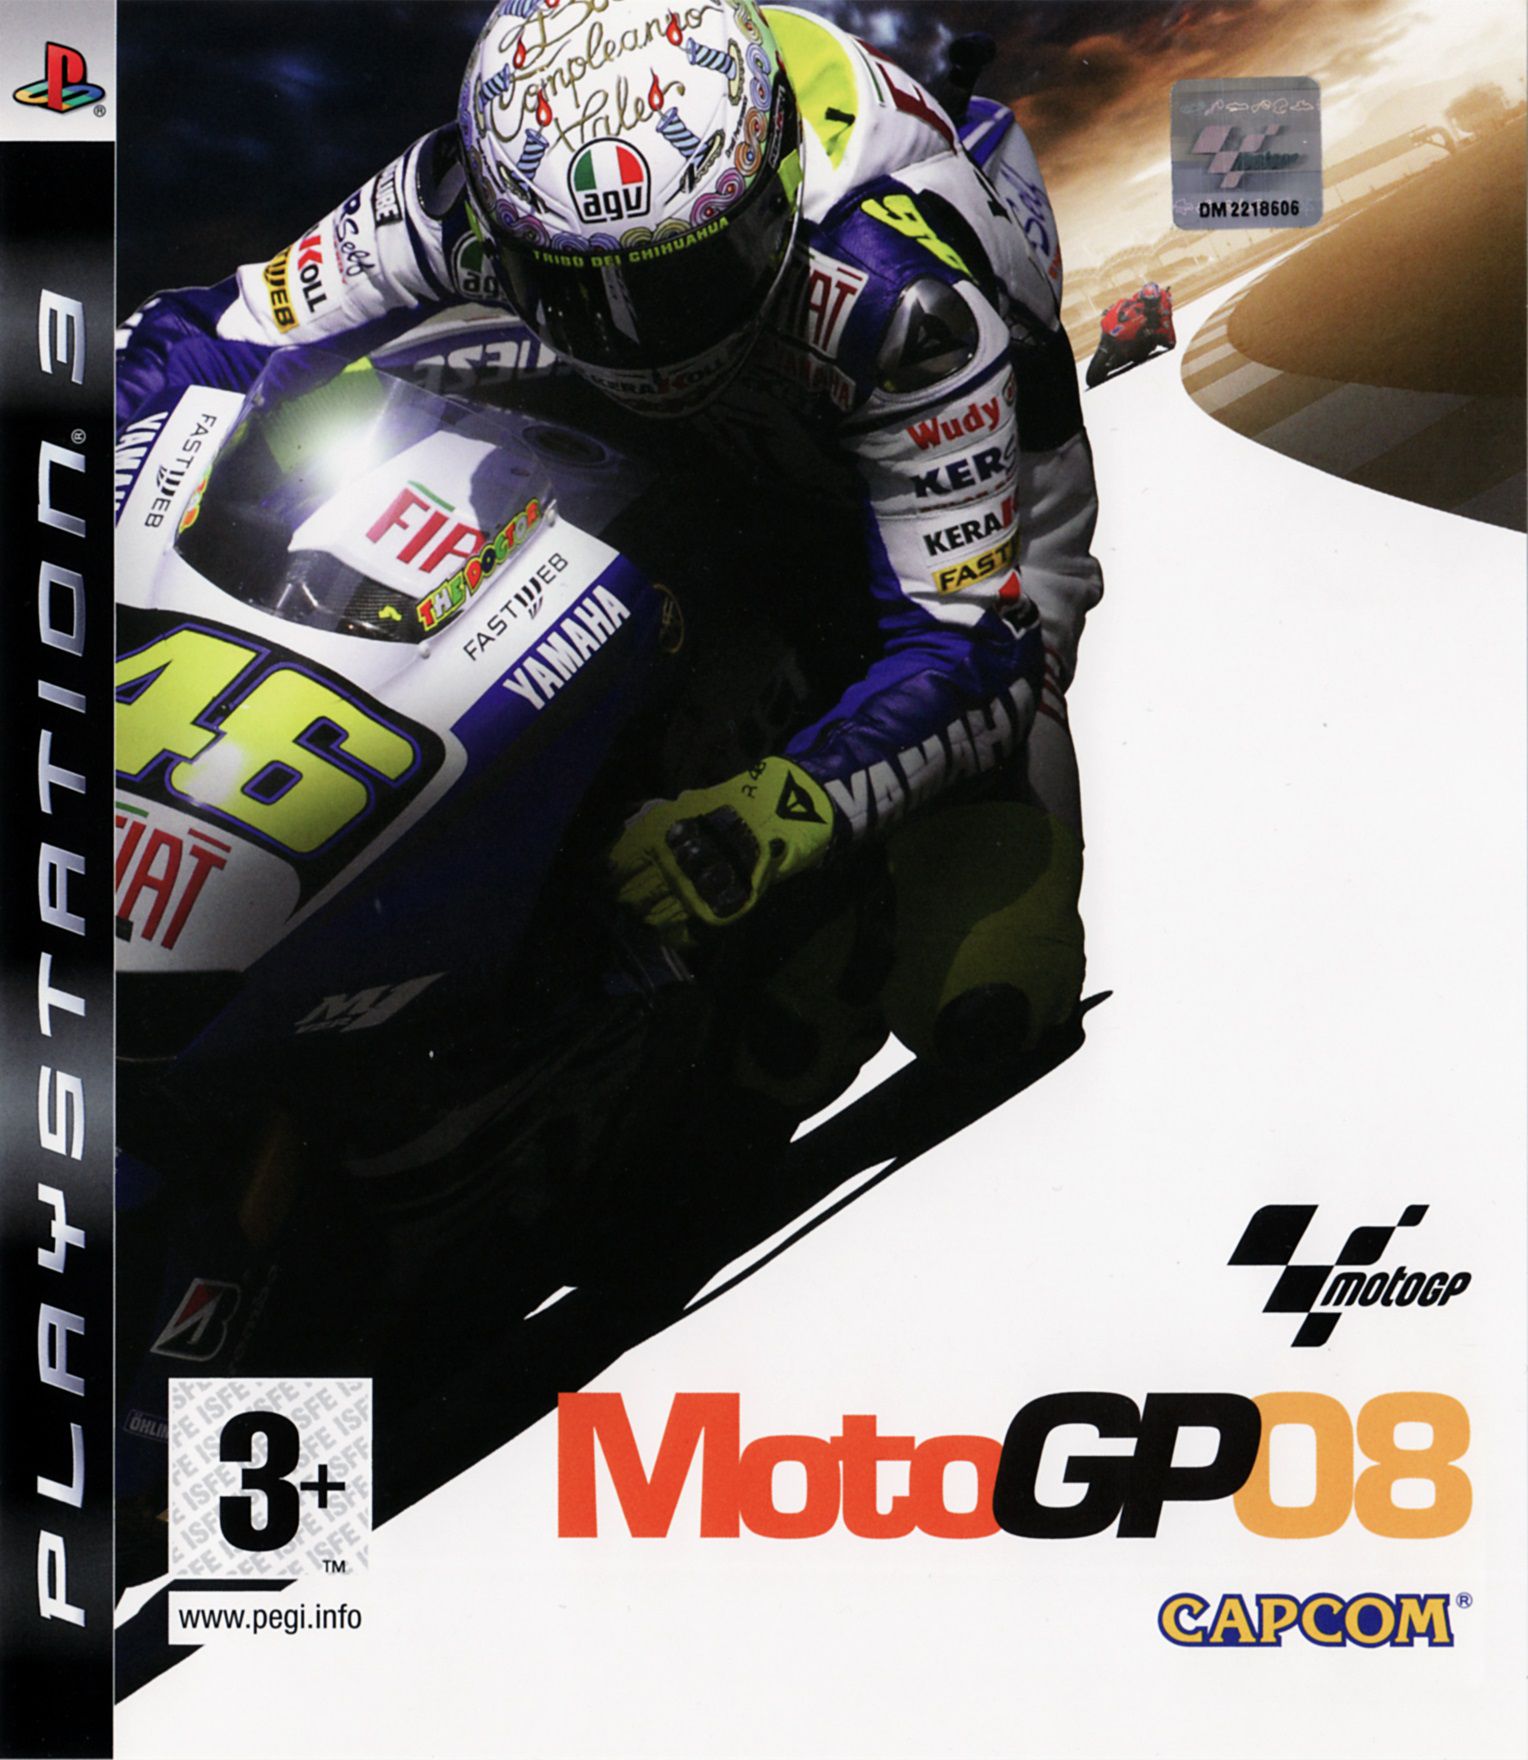 JOGO DE XBOX 360 MOTO GP 09/10